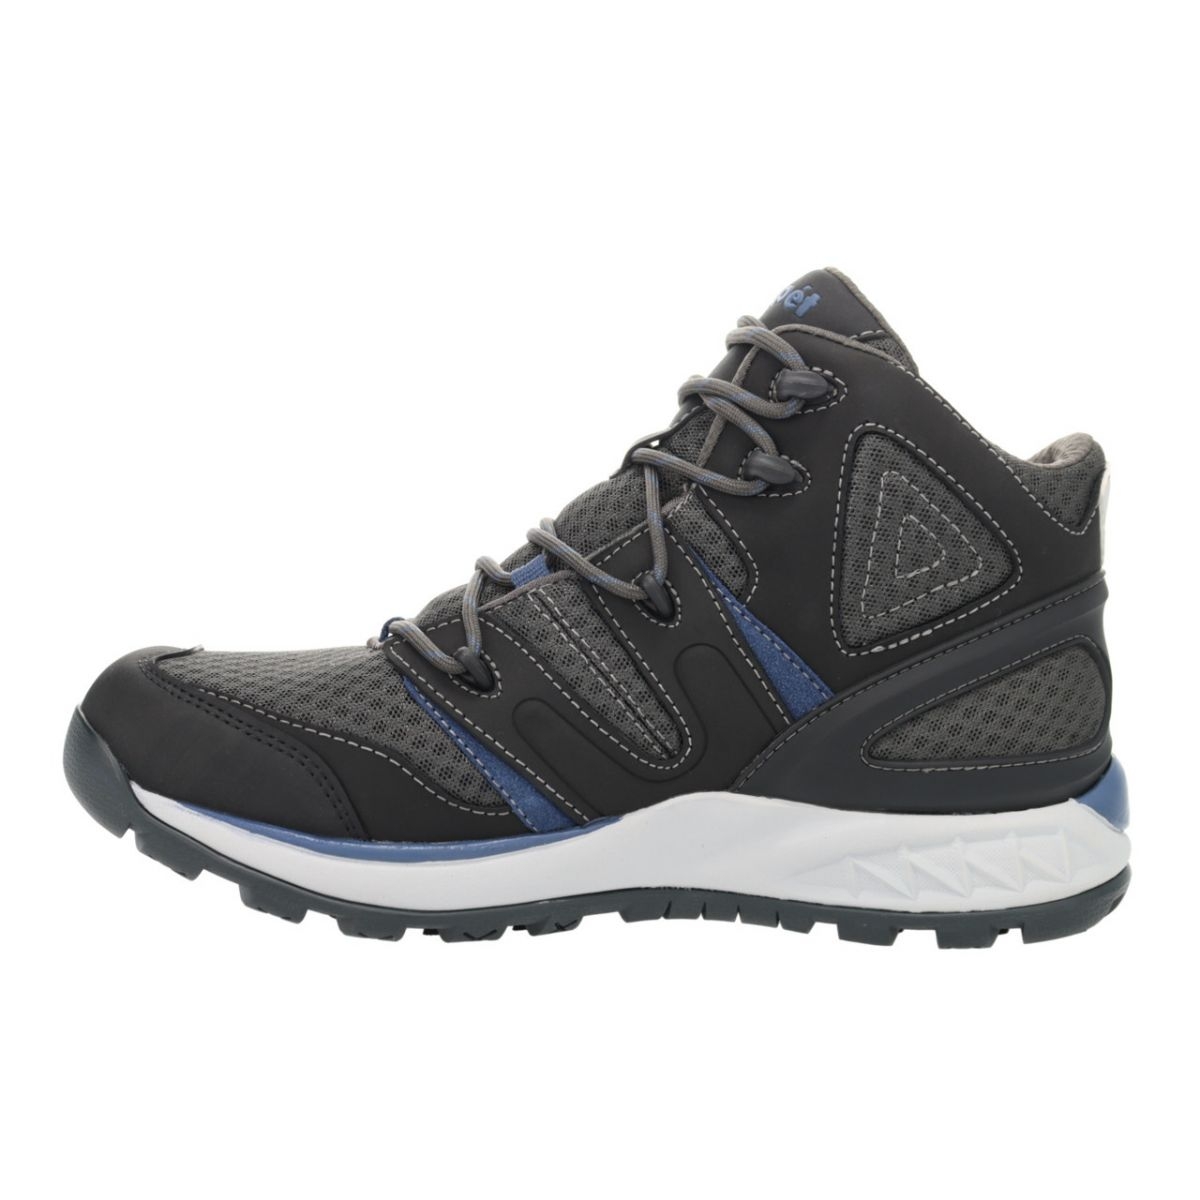 Propet Men's Veymont Waterproof Hiking Boot Grey/Blue - MOA022SGRB GREY/BLUE - GREY/BLUE, 11 XX-Wide